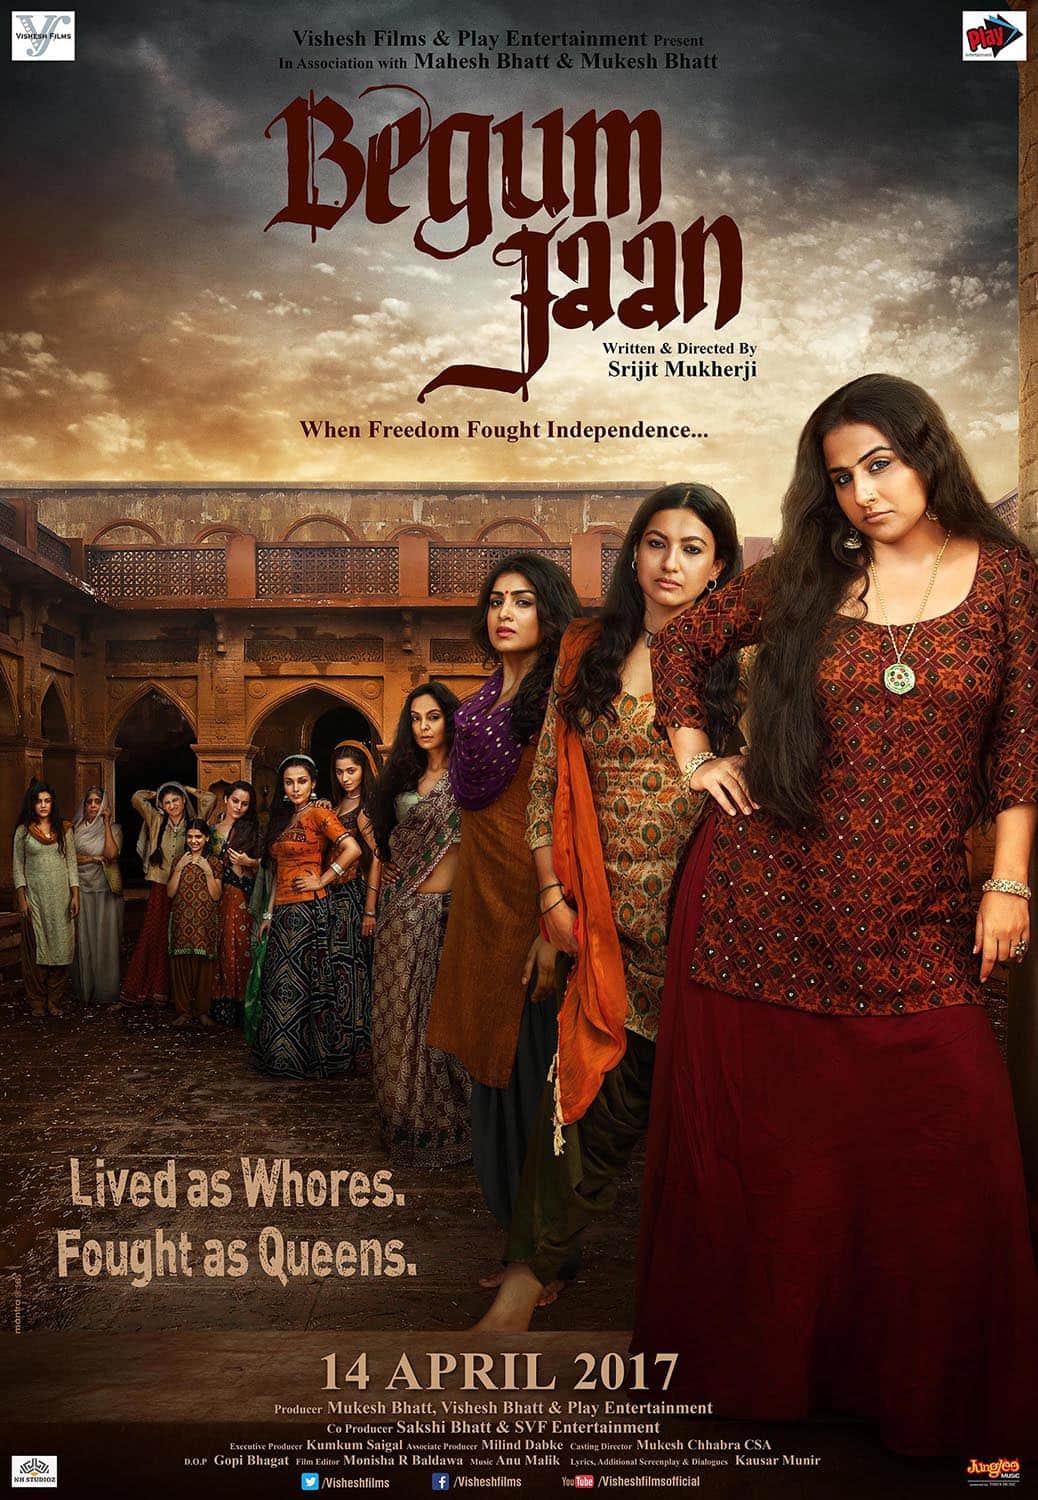 Begum Jaan - Film Cast, Release Date, Begum Jaan Full Movie Download,  Online MP3 Songs, HD Trailer | Bollywood Life